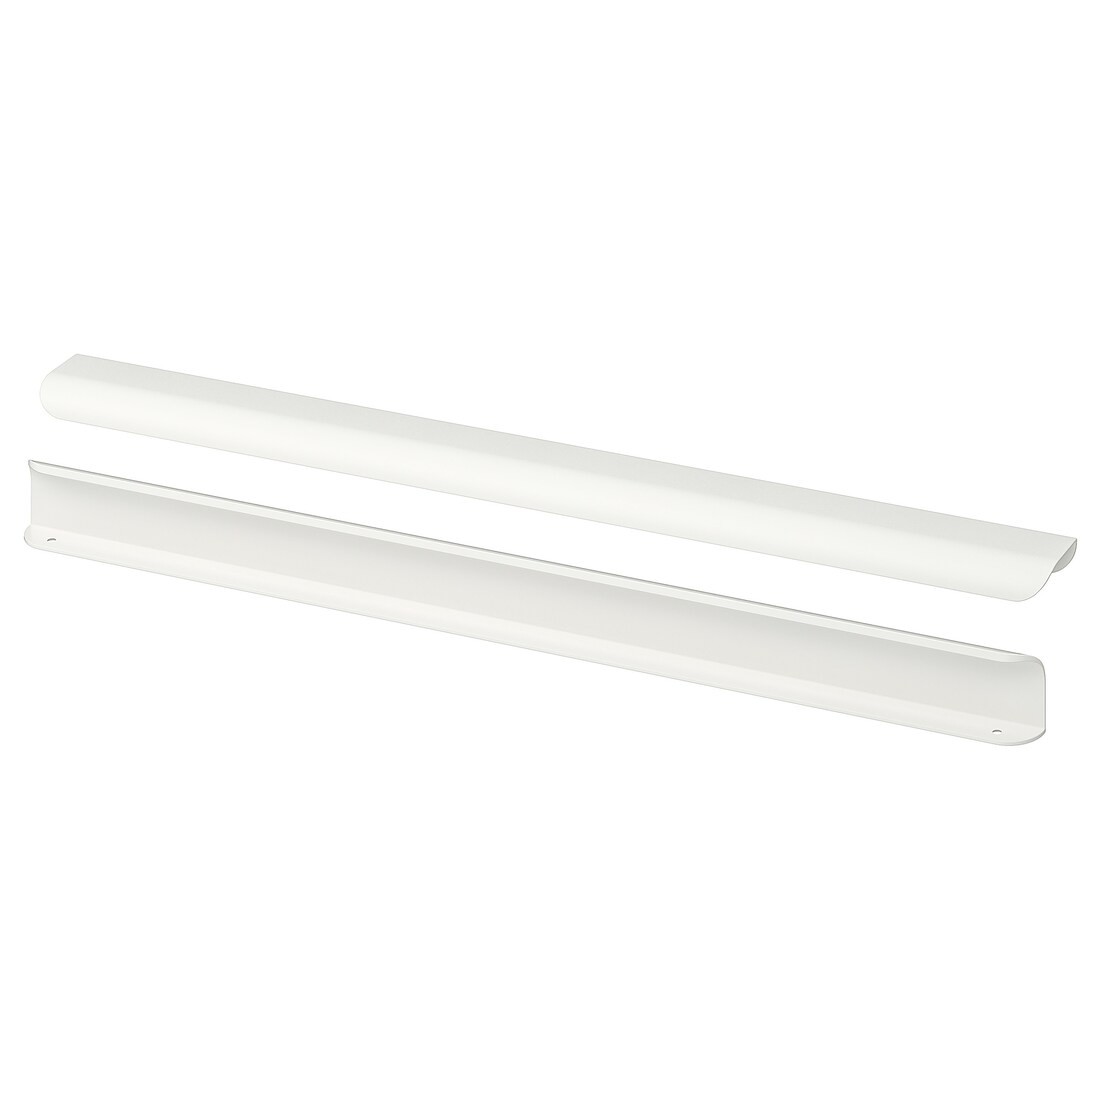 IKEA BILLSBRO БИЛЬСБРУ Ручка, белый, 520 мм 50334317 | 503.343.17